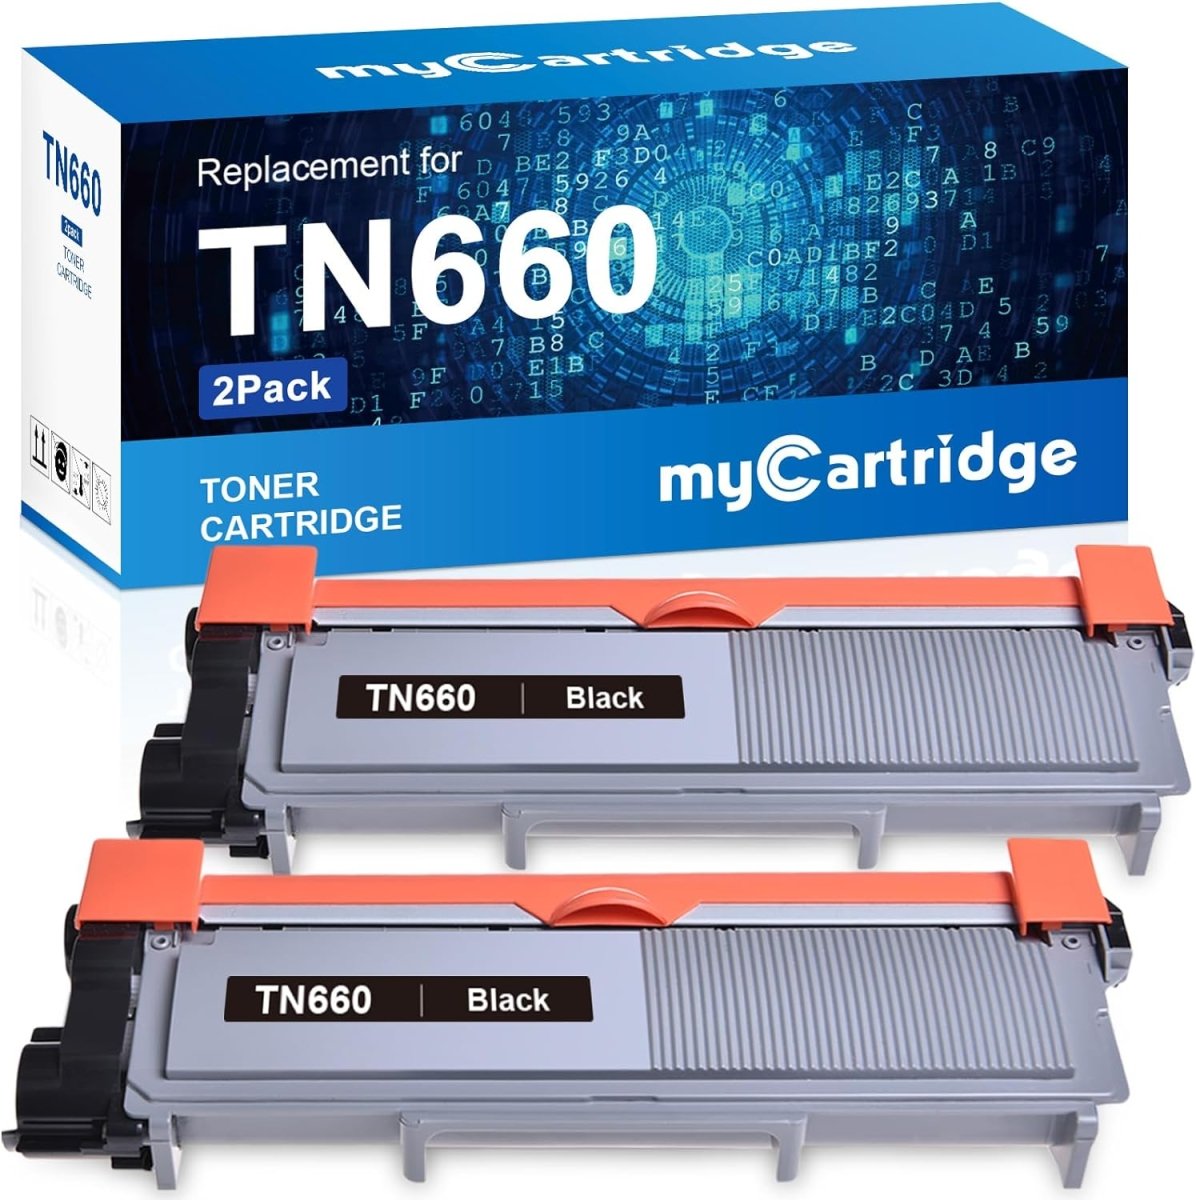 Compatible Brother TN660 Toner Cartridge 2 Black - myCartridge - Linford Office:Printer Ink & Toner Cartridge